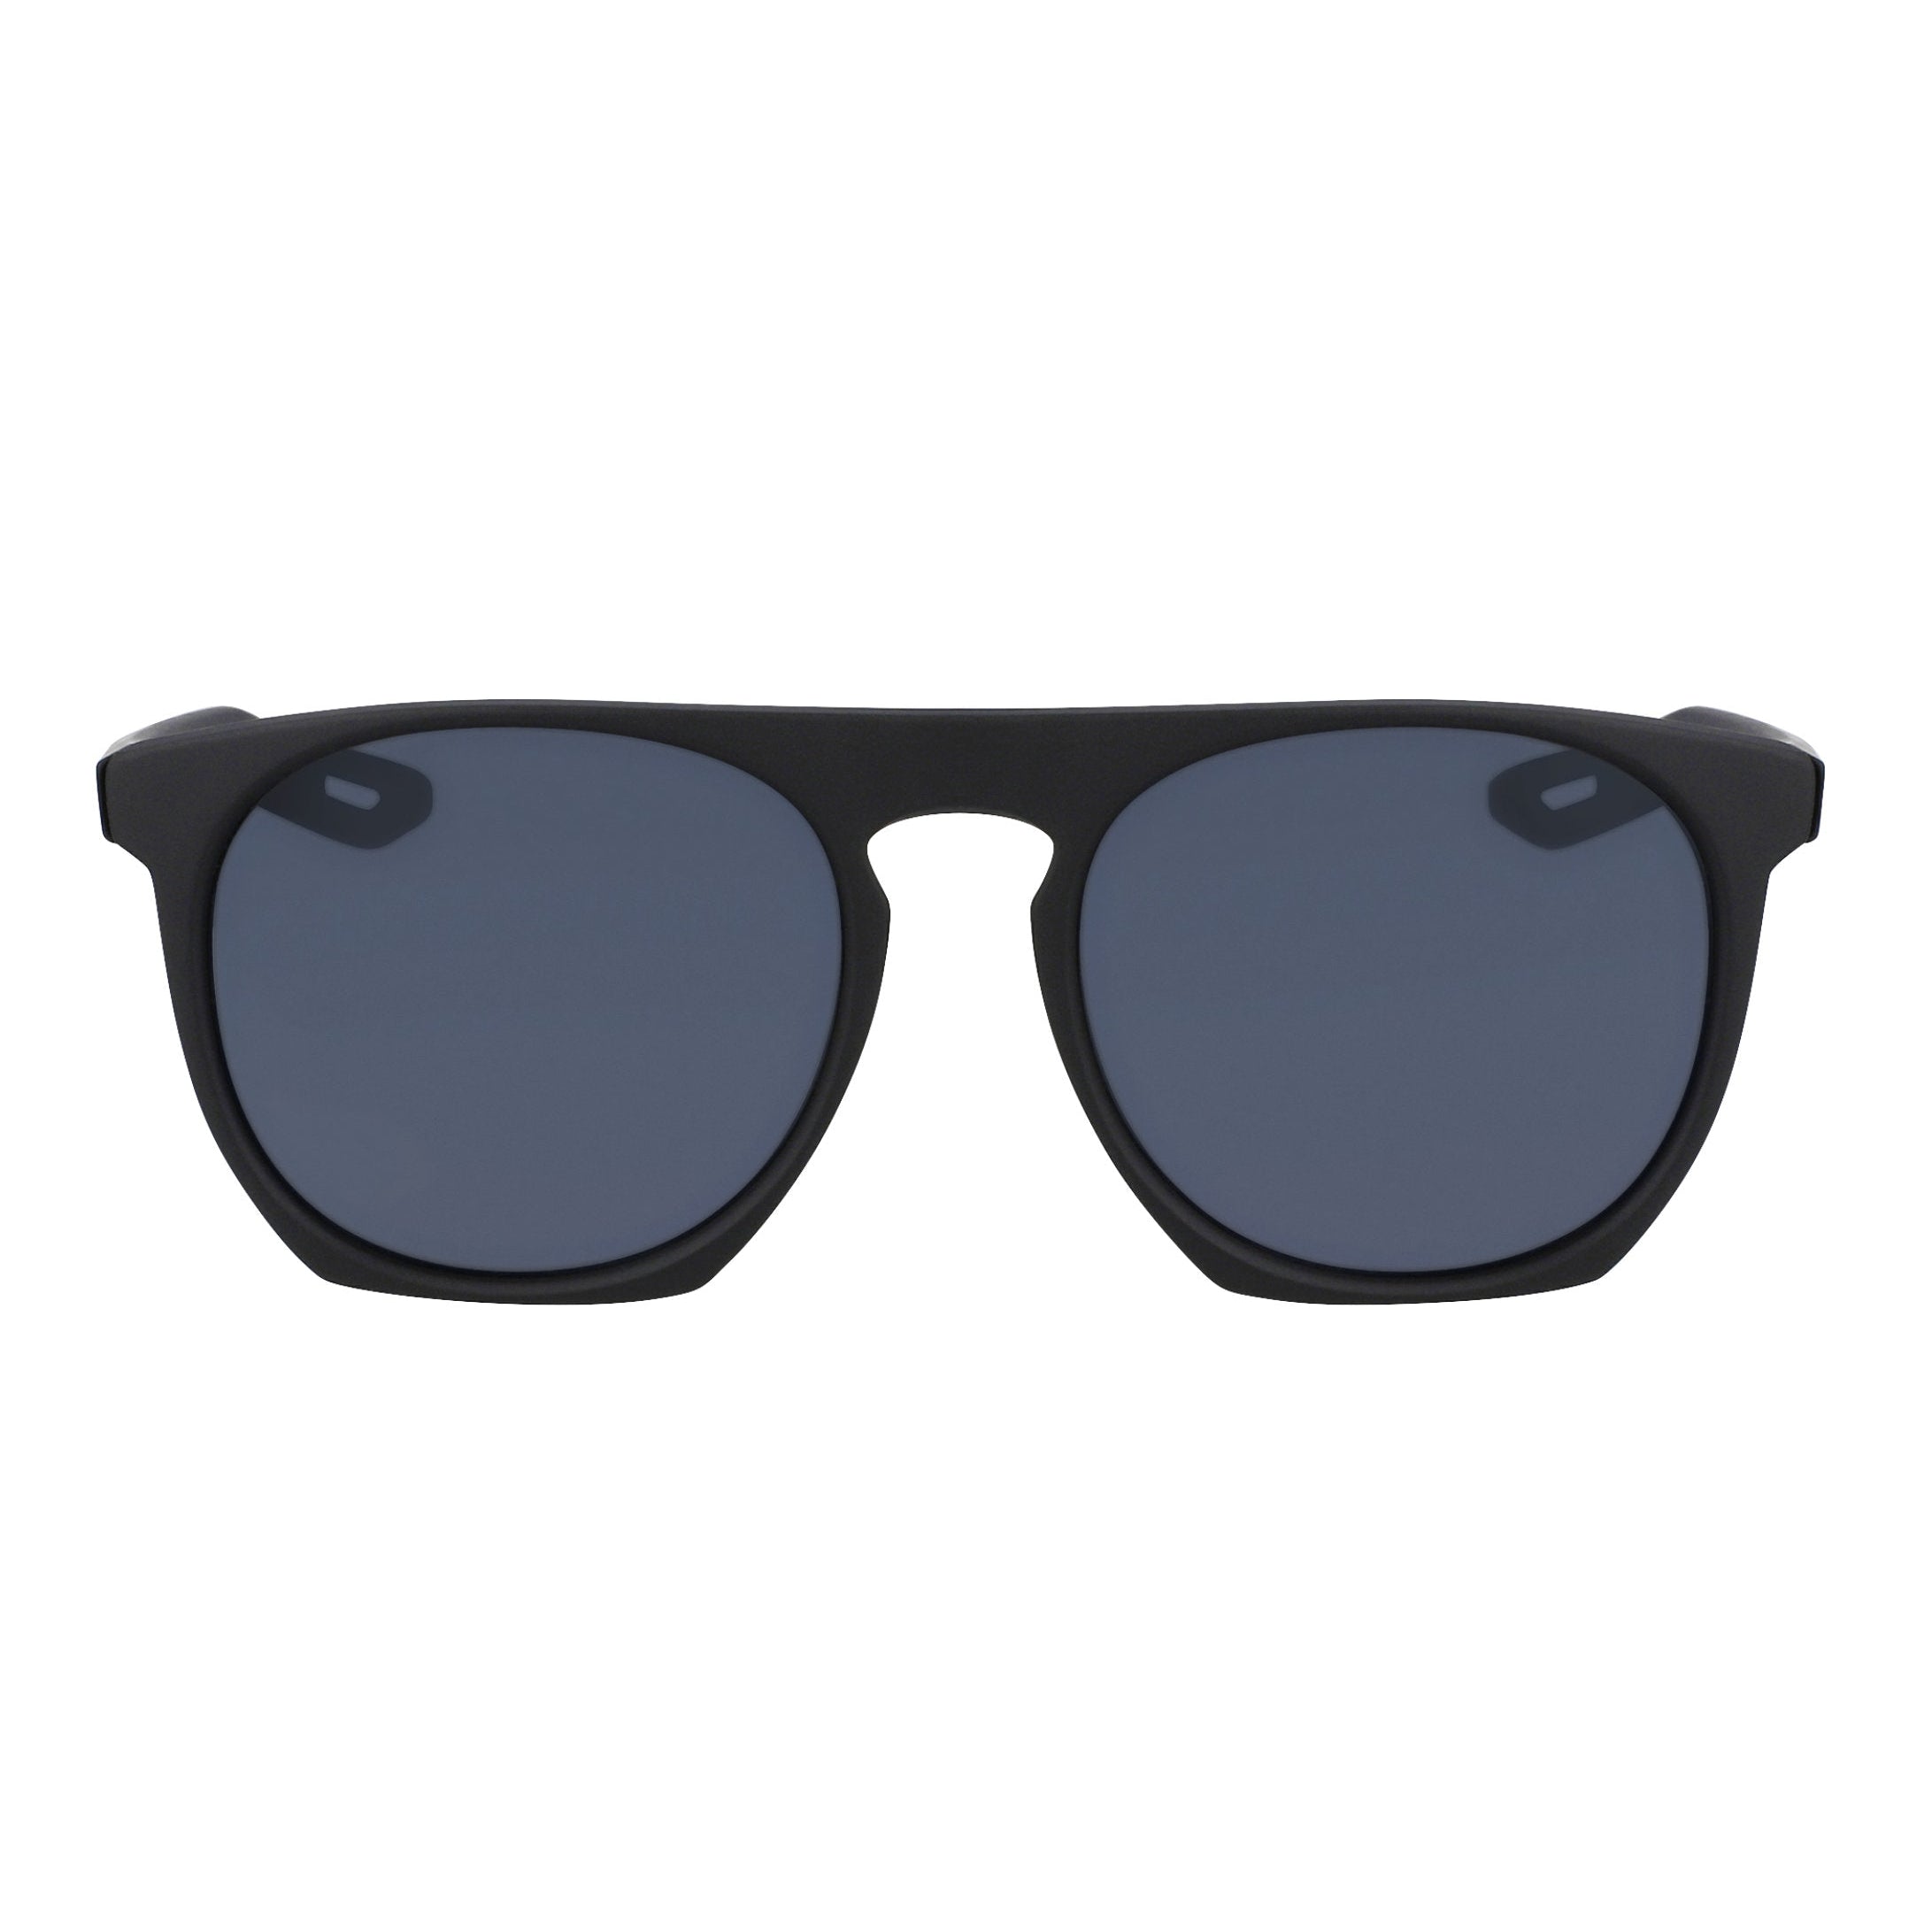 Nike Sunglasses Flatspot Black/D.Grey Lens